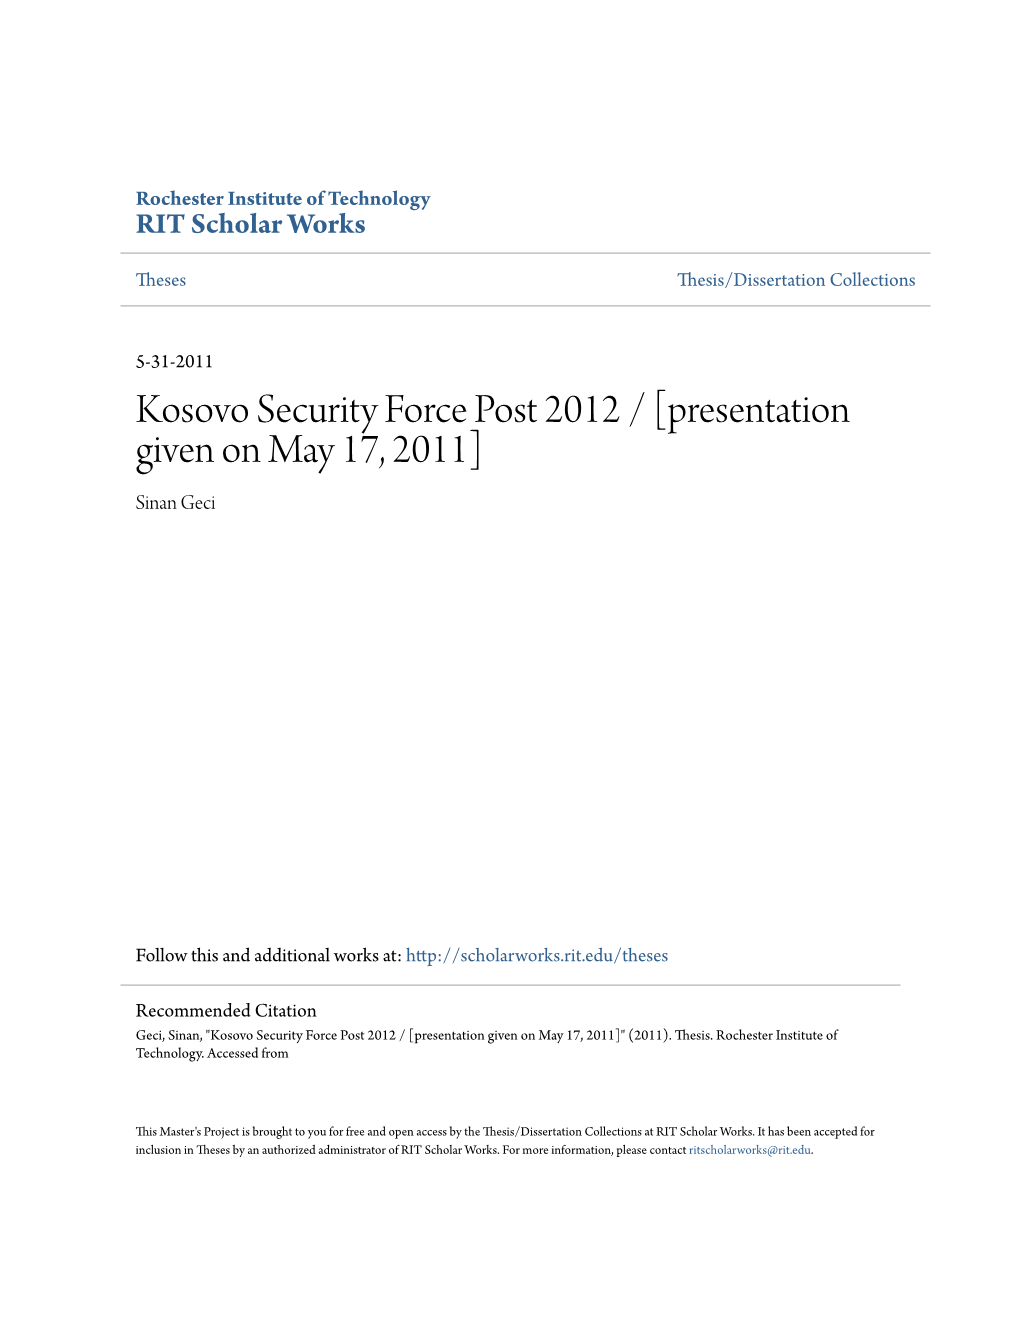 Kosovo Security Force Post 2012 / [Presentation Given on May 17, 2011] Sinan Geci